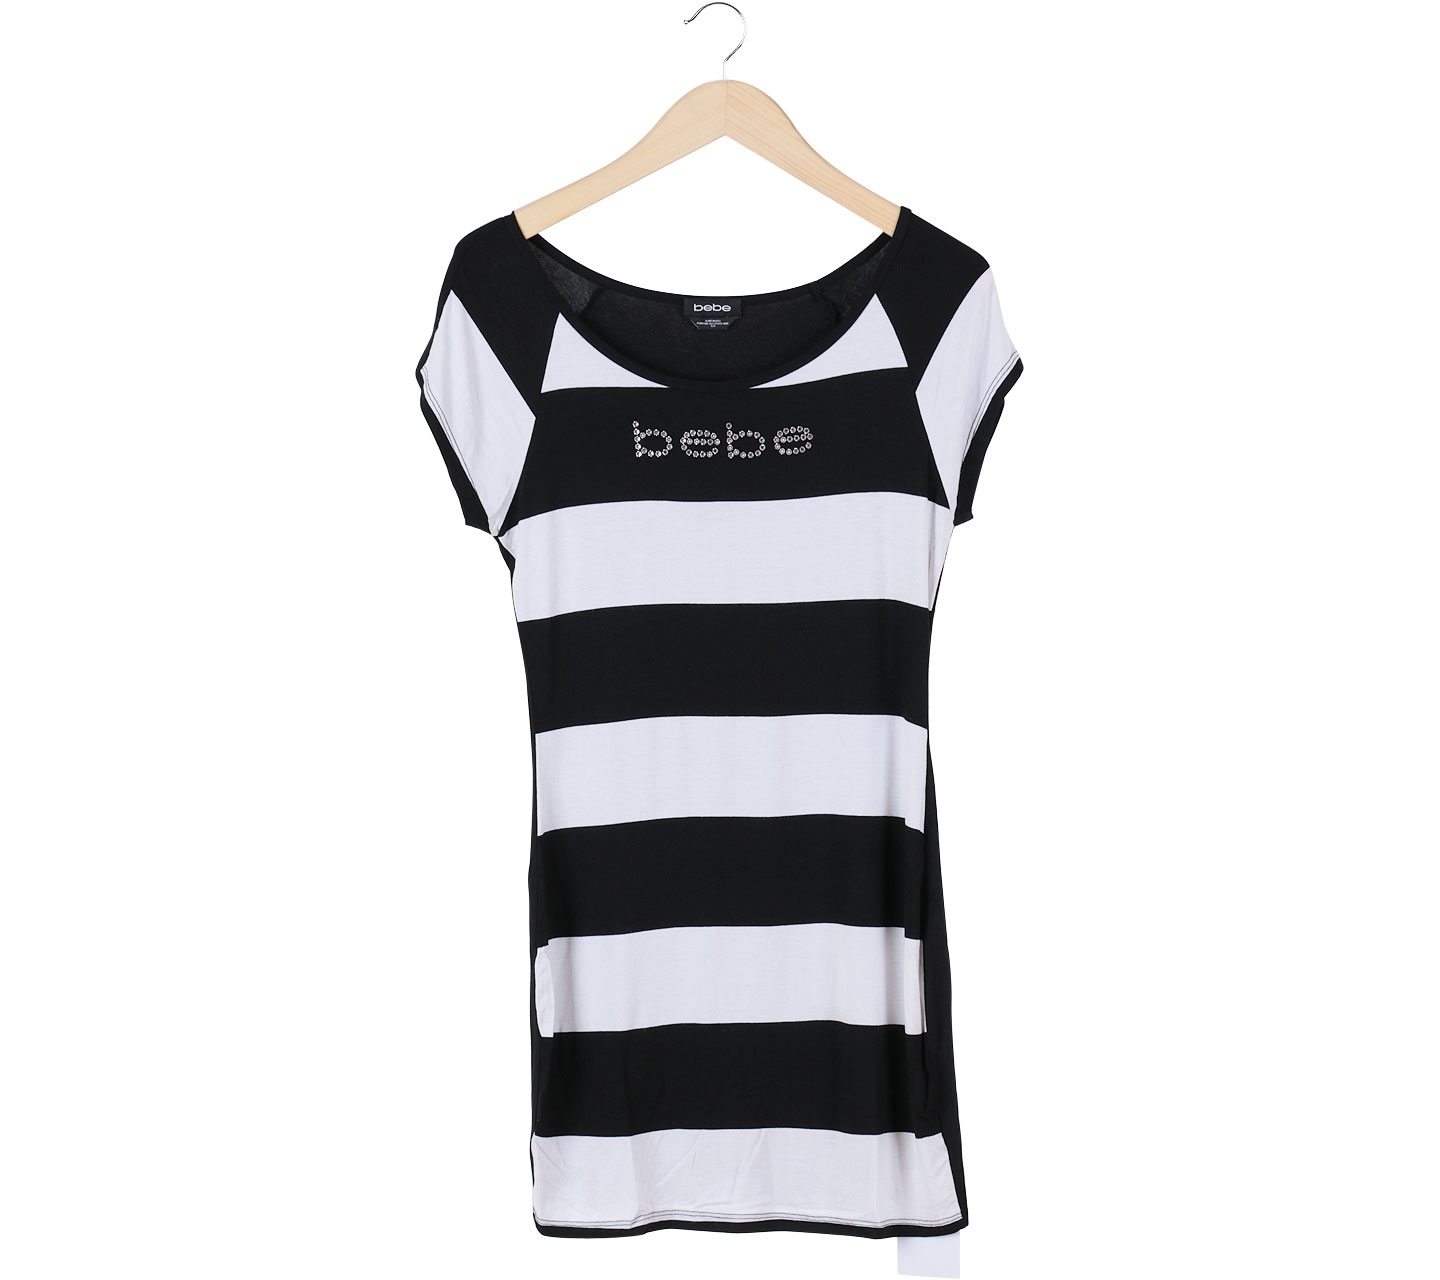 Bebe Black and White Stripes Mini Dress